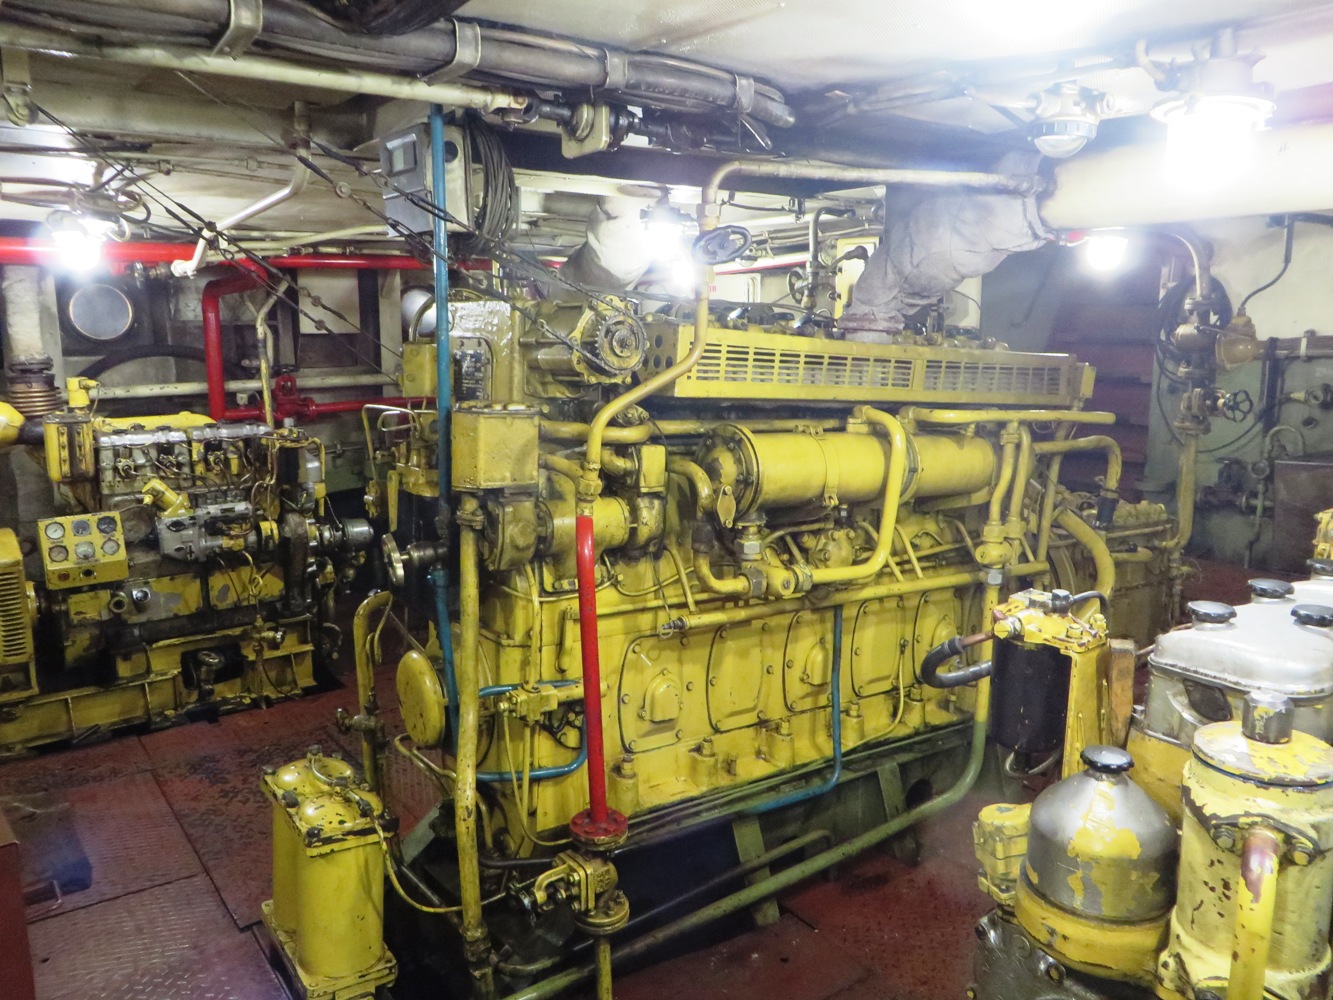 ОС-351. Engine Rooms